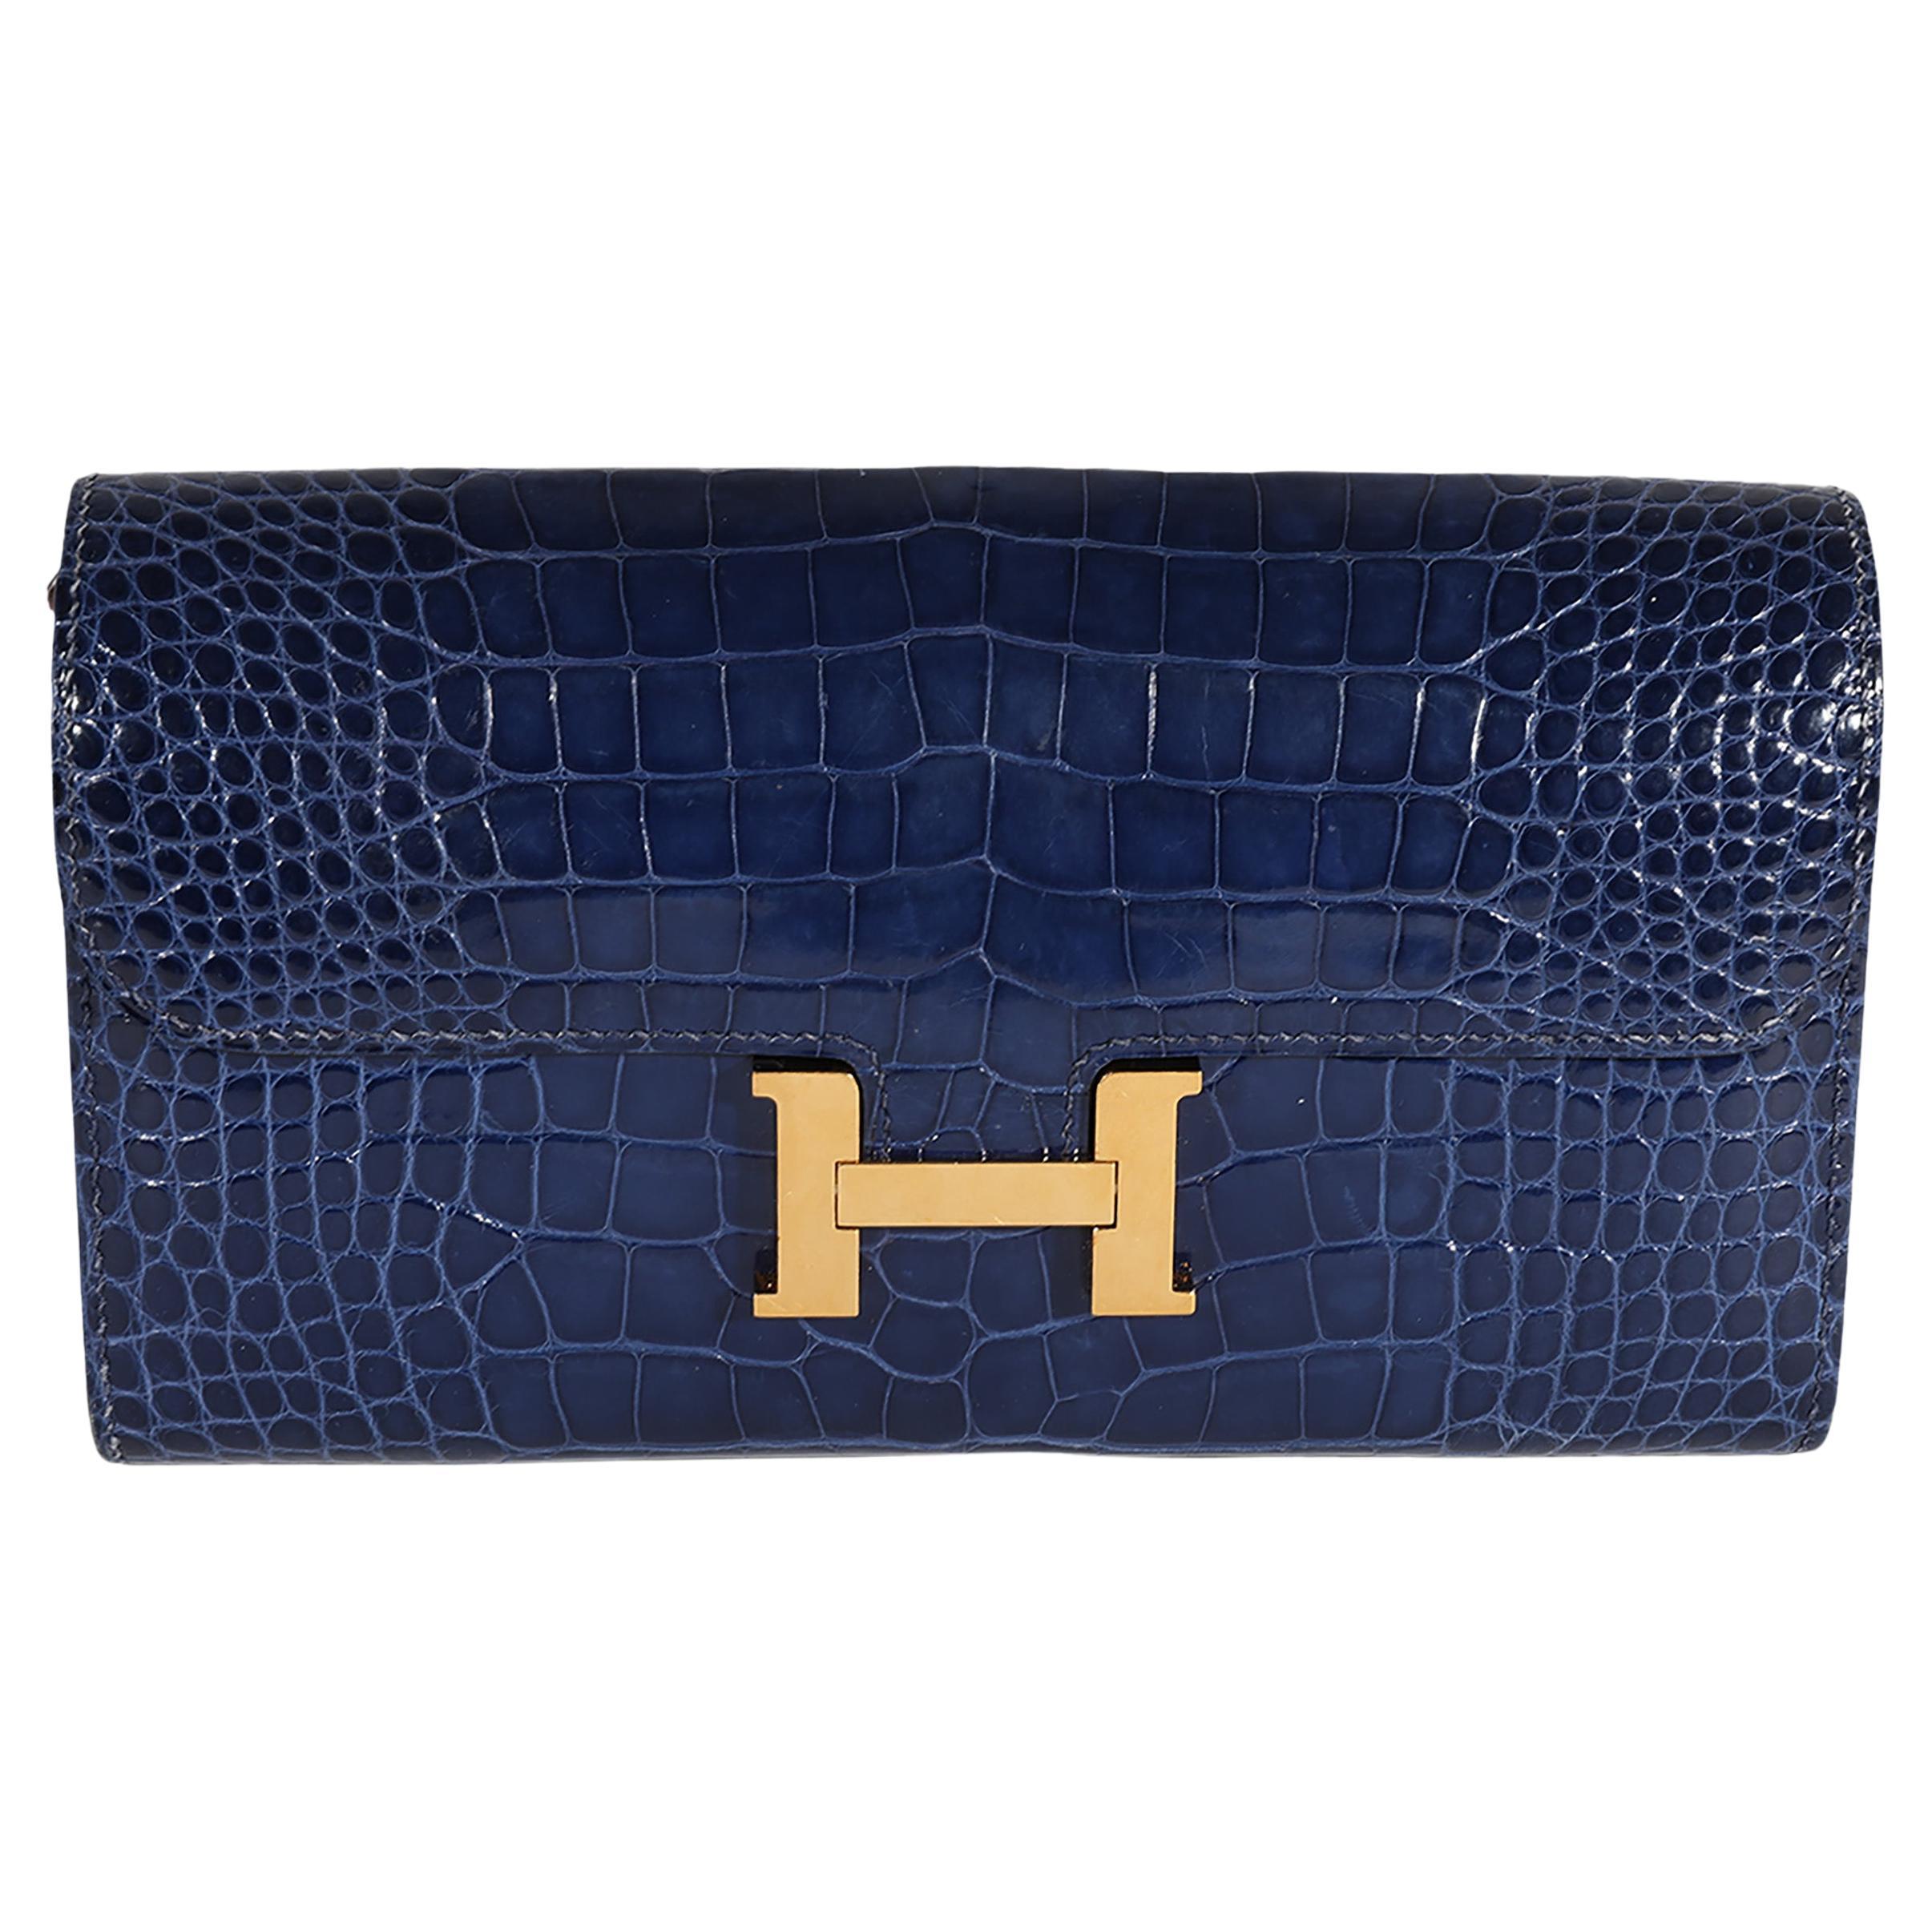 Hermès Bleu Saphir & Bleu Paon Shiny Alligator Constance Wallet GHW